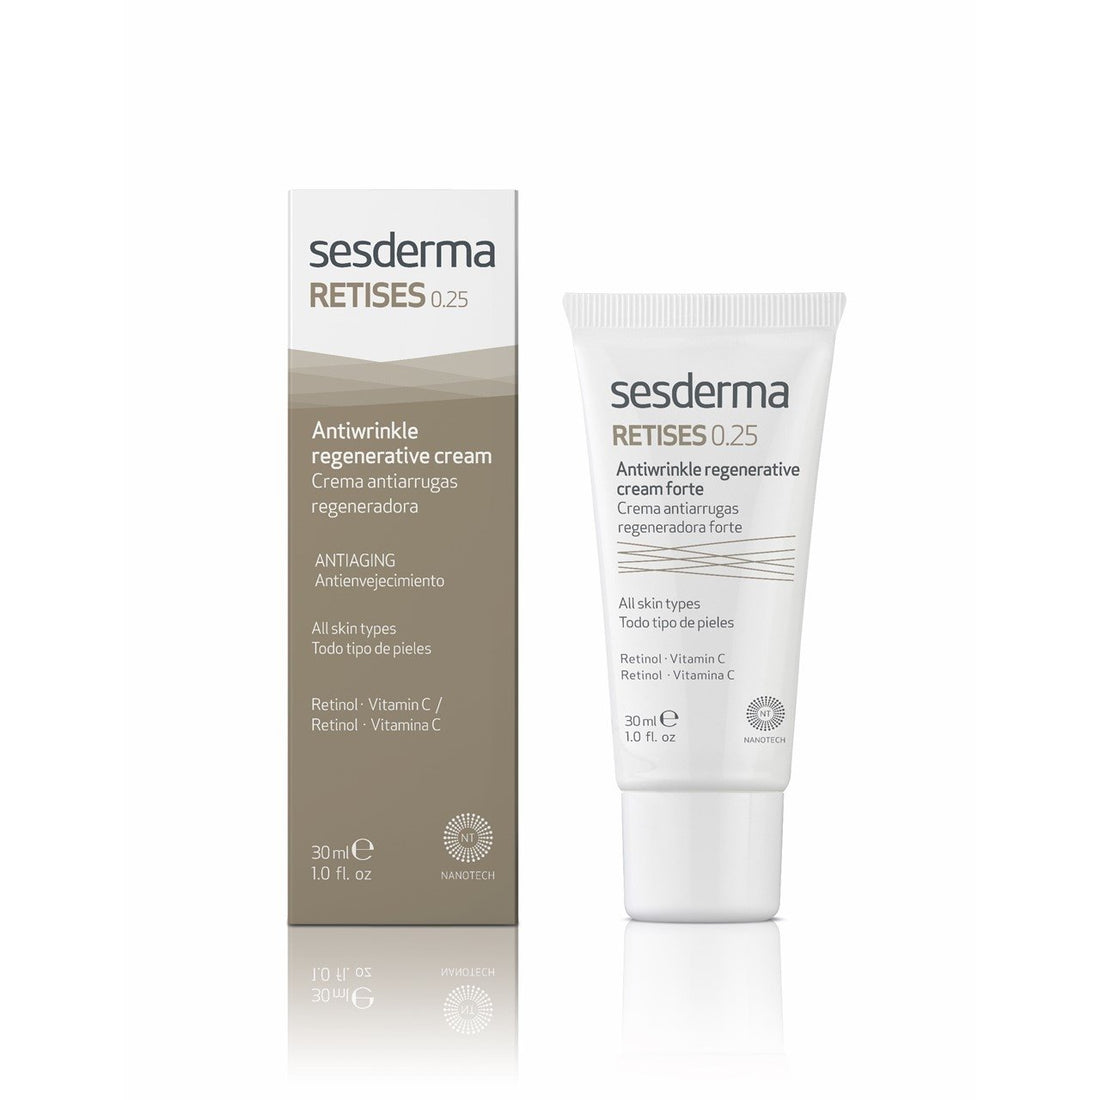 Sesderma Retises 0.25 Antiwrinkle Regenerative Cream 30ml (1.01fl oz)